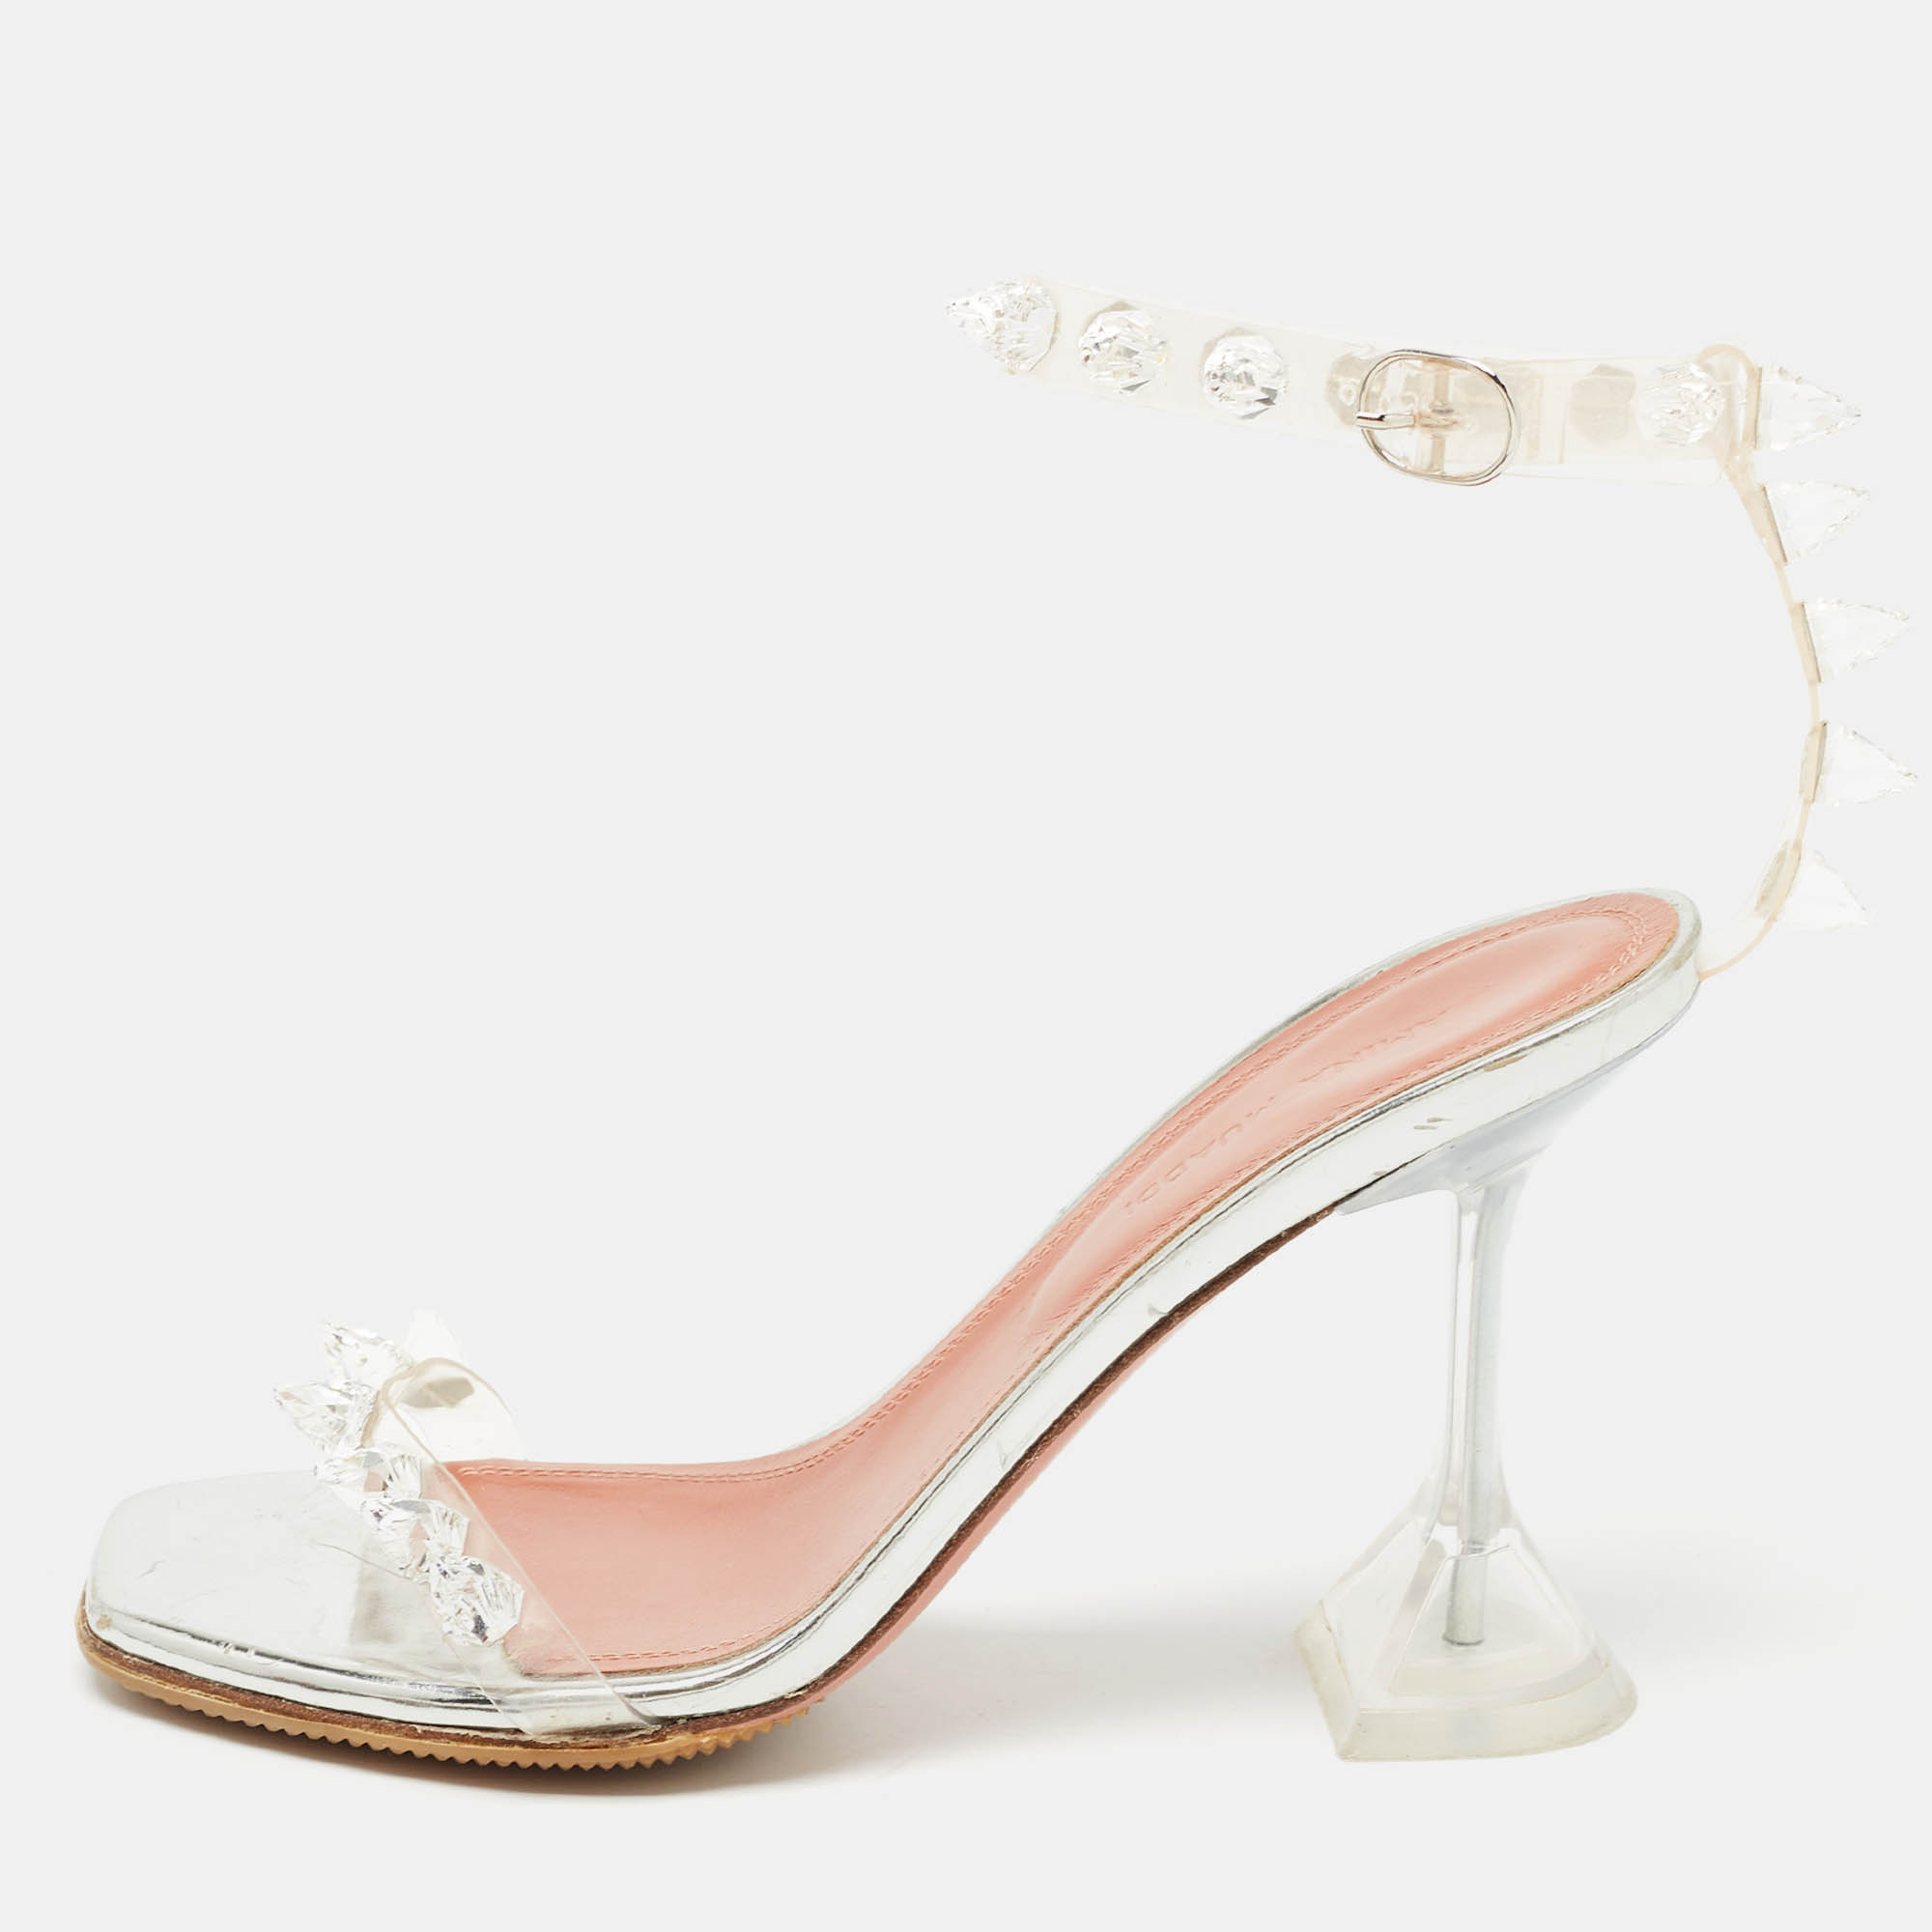 Amina muaddi transparent  pvc julia crystal embellished ankle strap sandals size 35